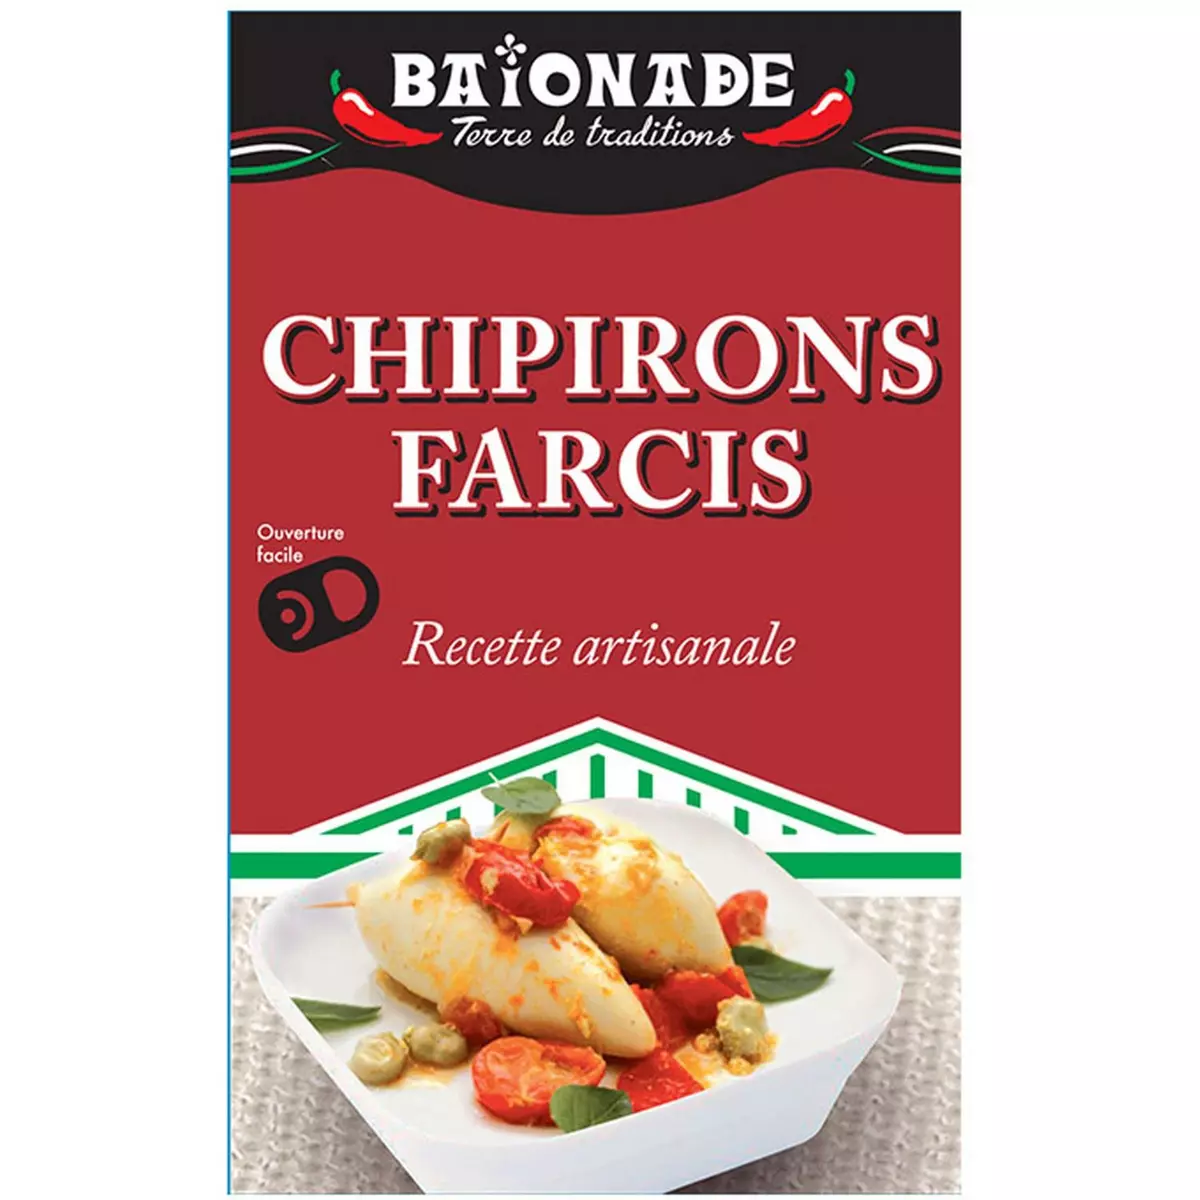 BAIONADE Chipirons farcis 115g